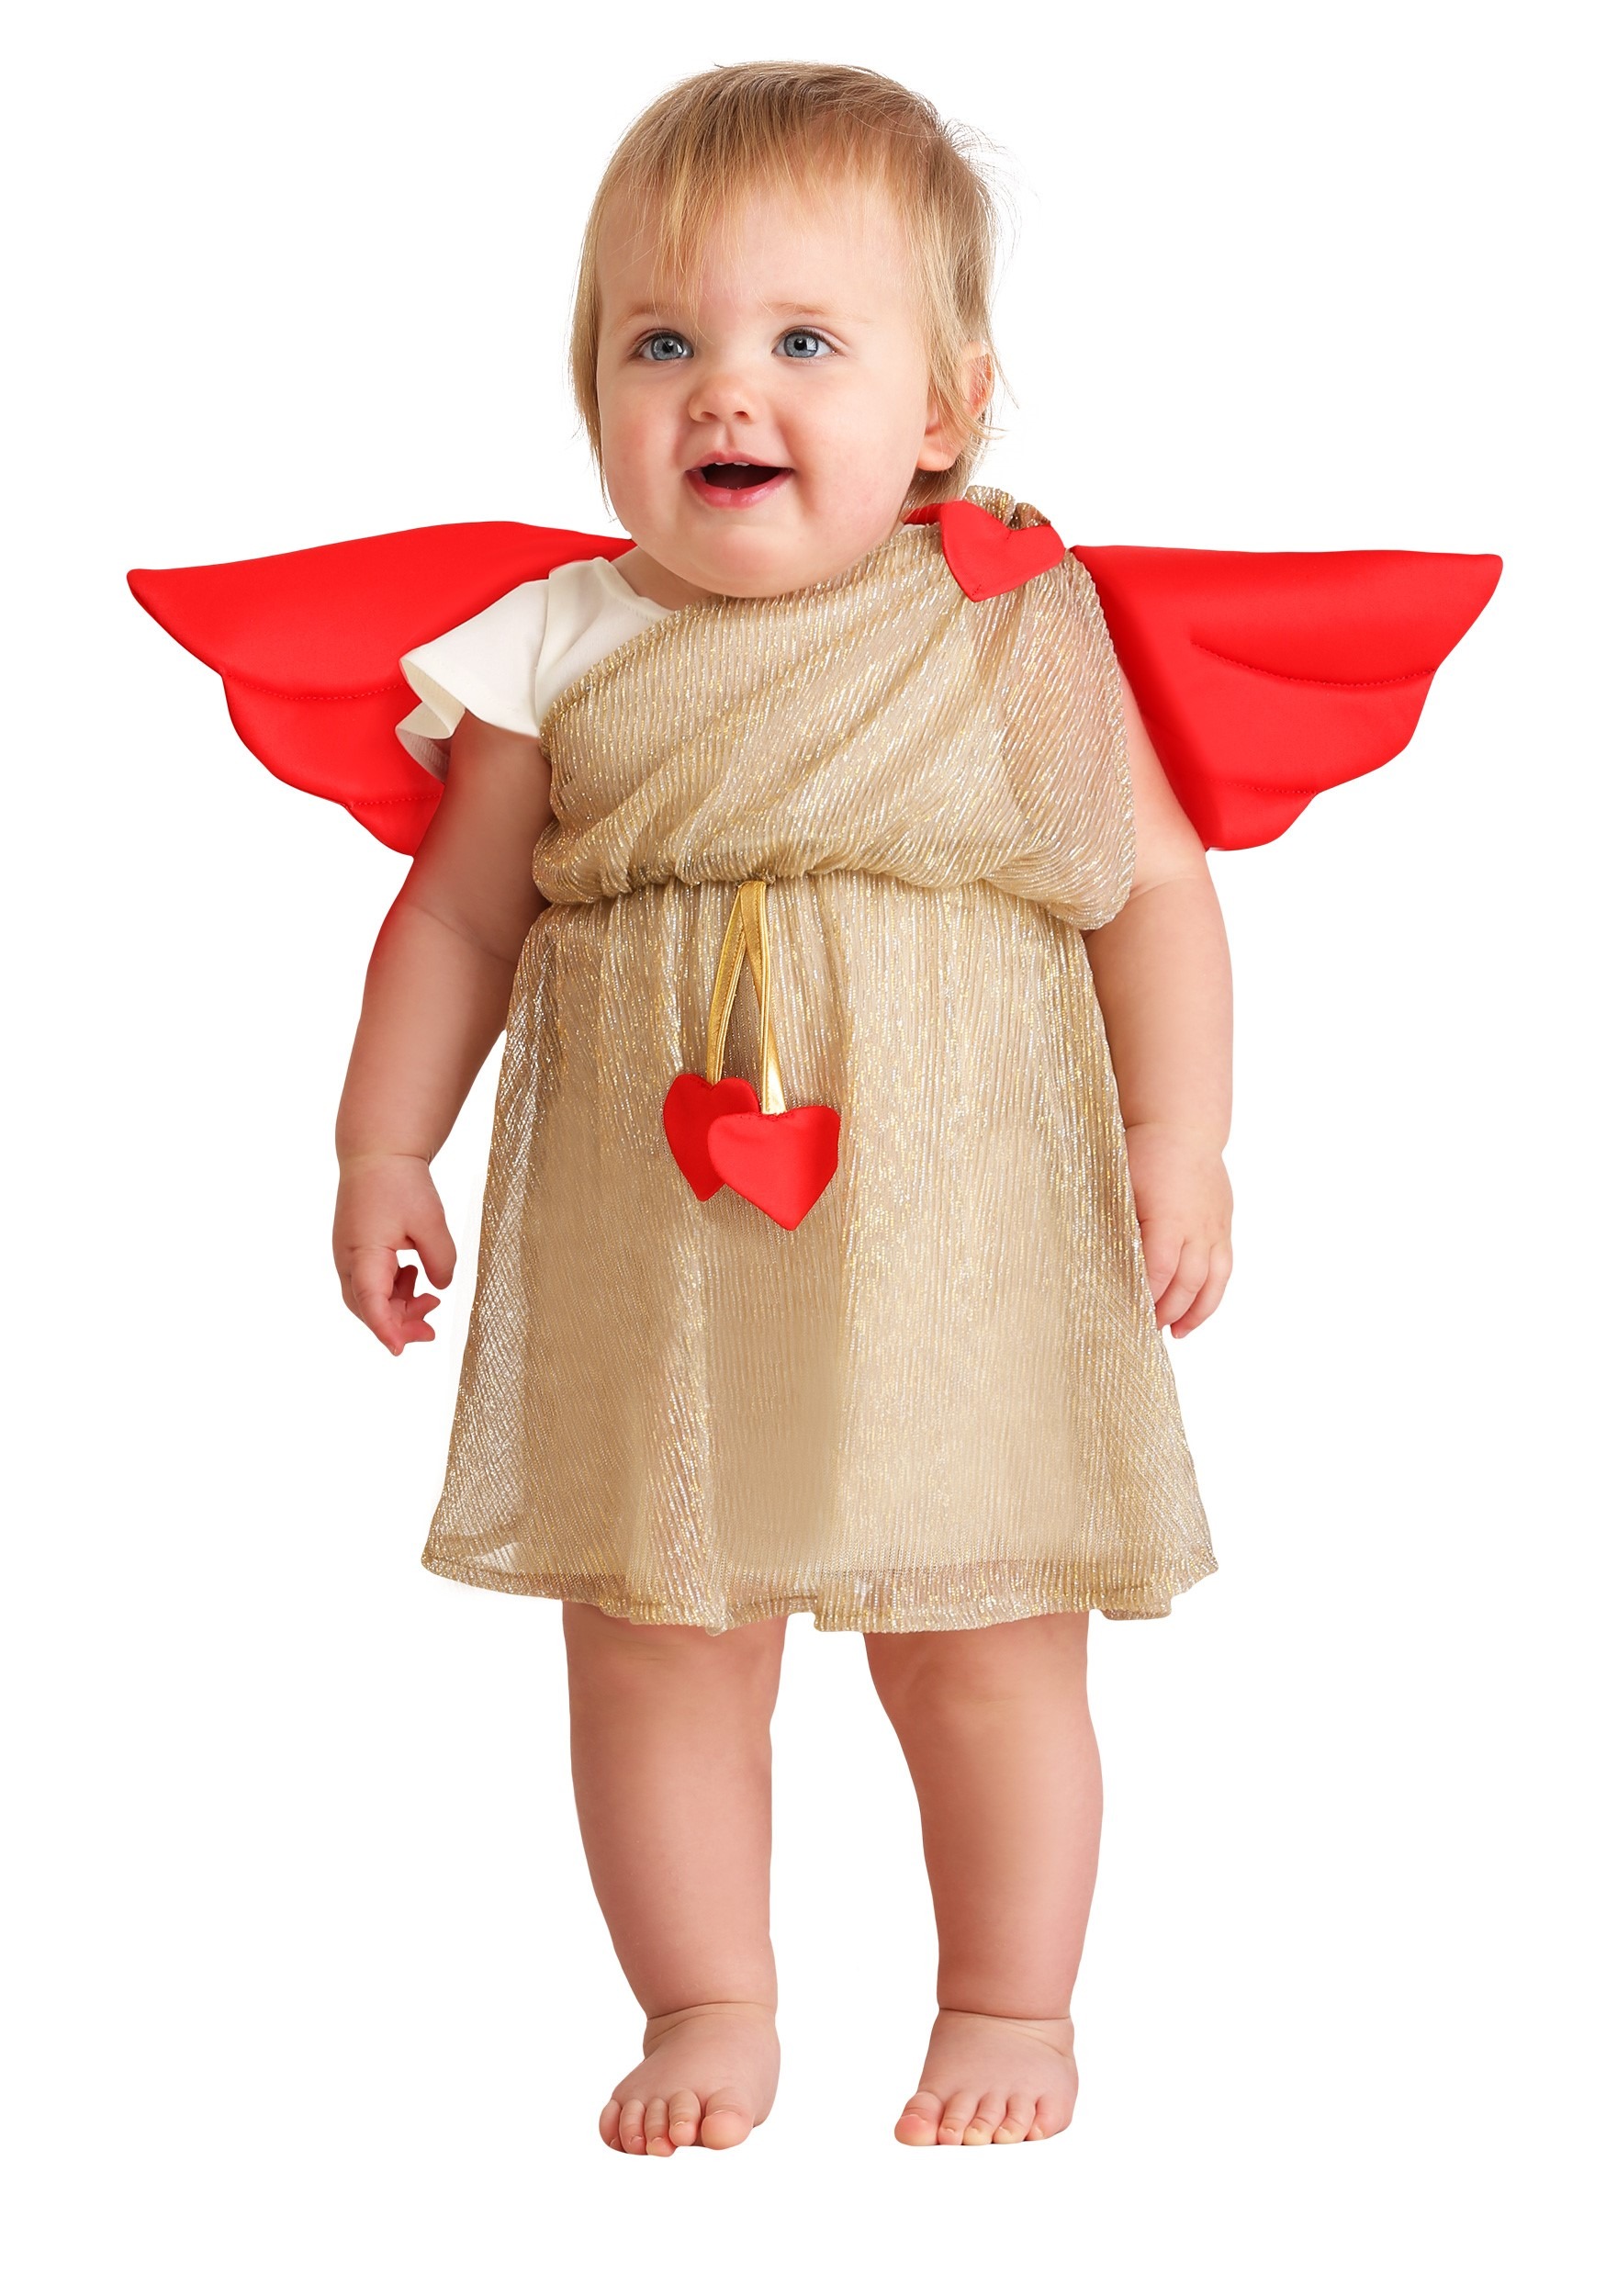 Photos - Fancy Dress FUN Costumes Cupid Infant Costume Orange/White/Red FUN0416IN